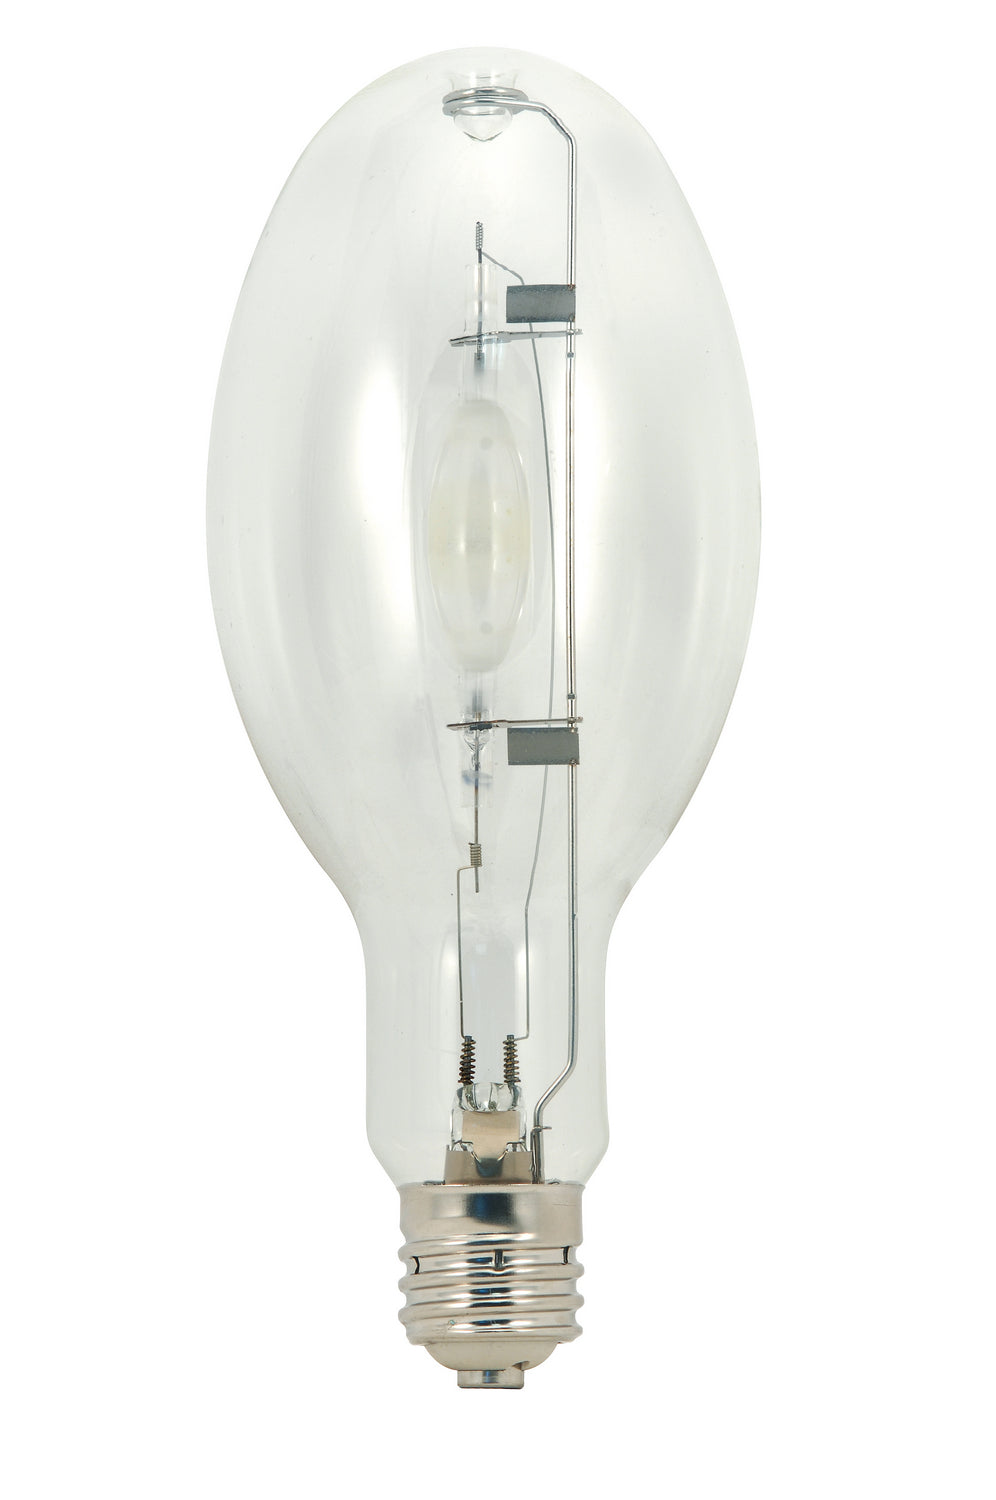 Satco - S5838 - Light Bulb